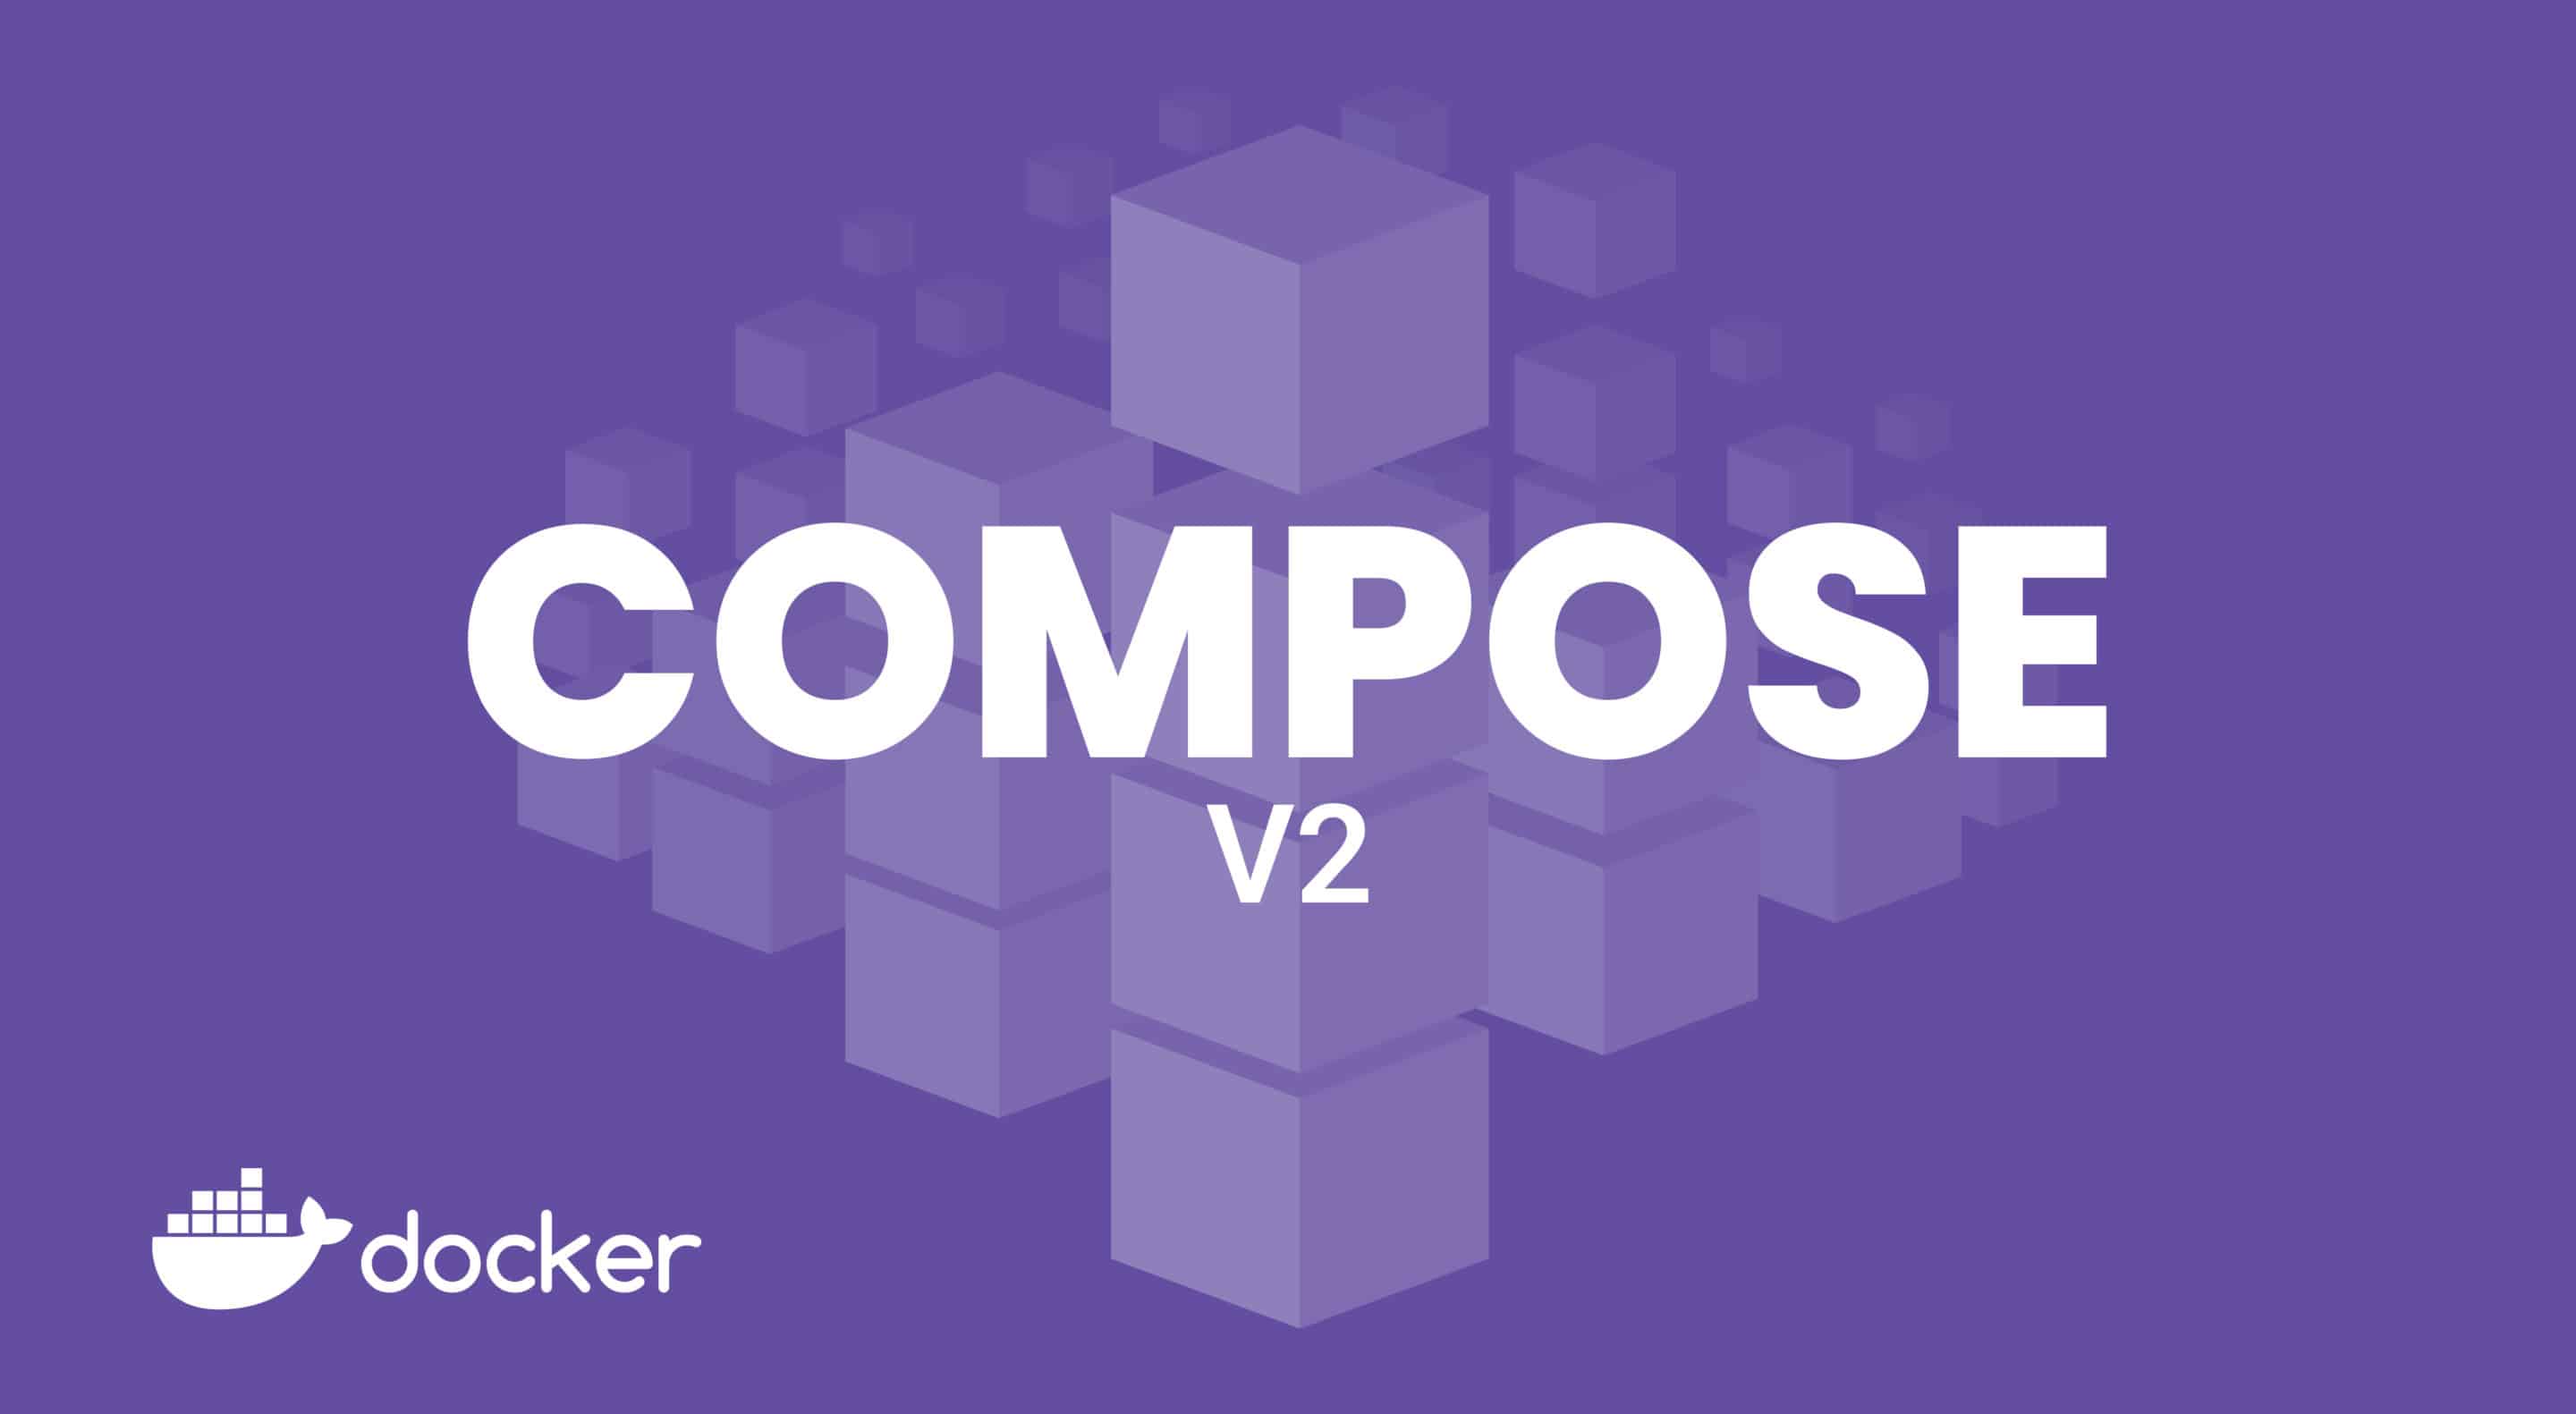 Switch to docker compose v2.